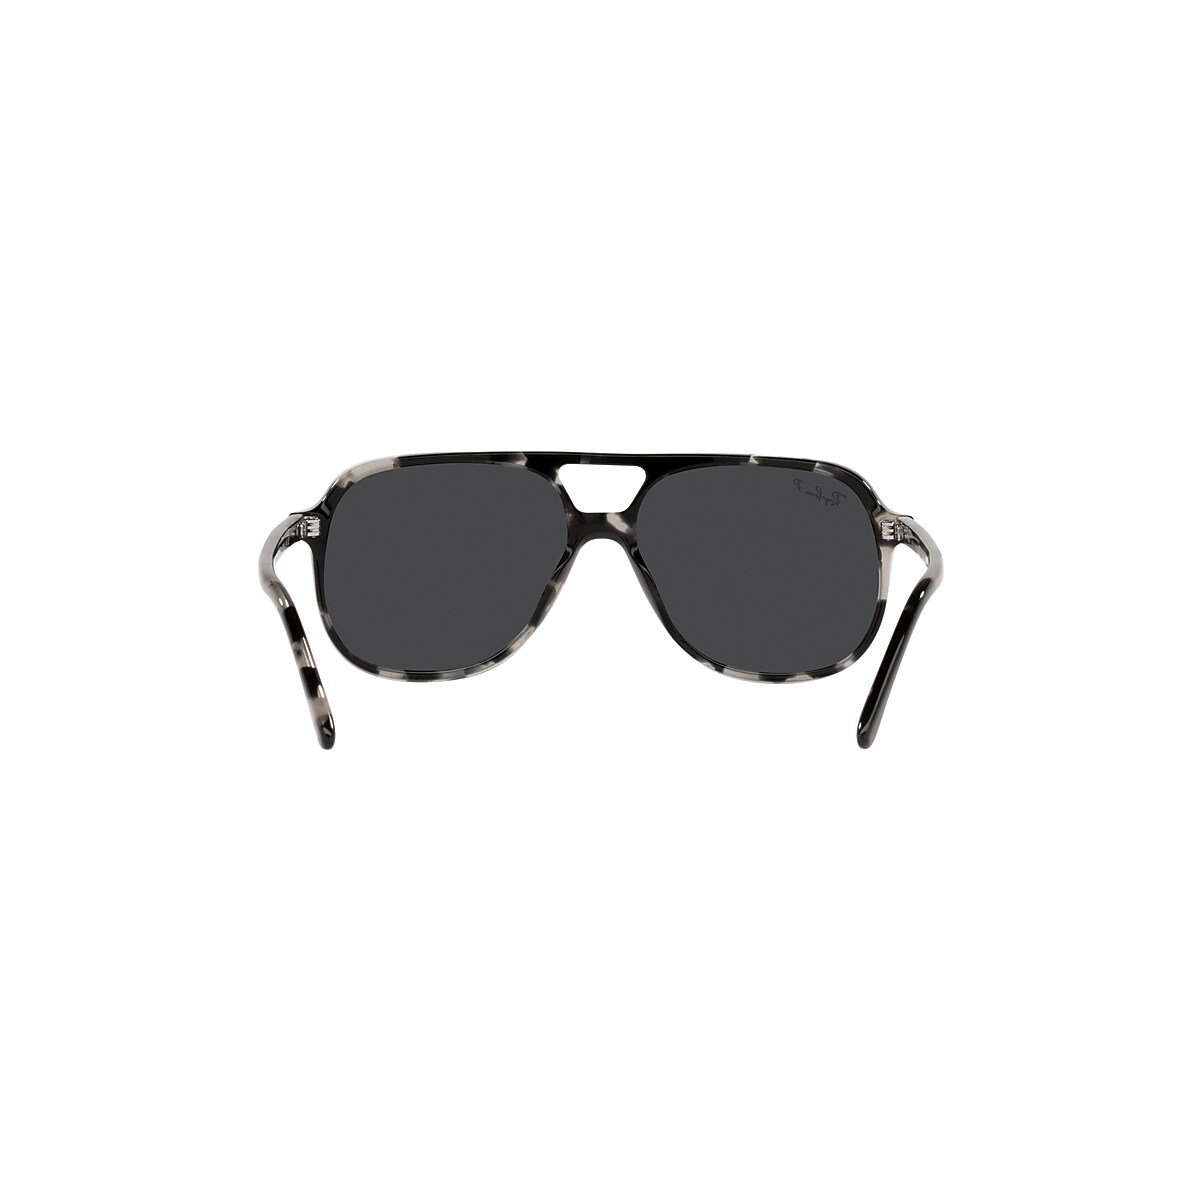 Bill Sunglasses in Grey Havana and Black | Ray-Ban®